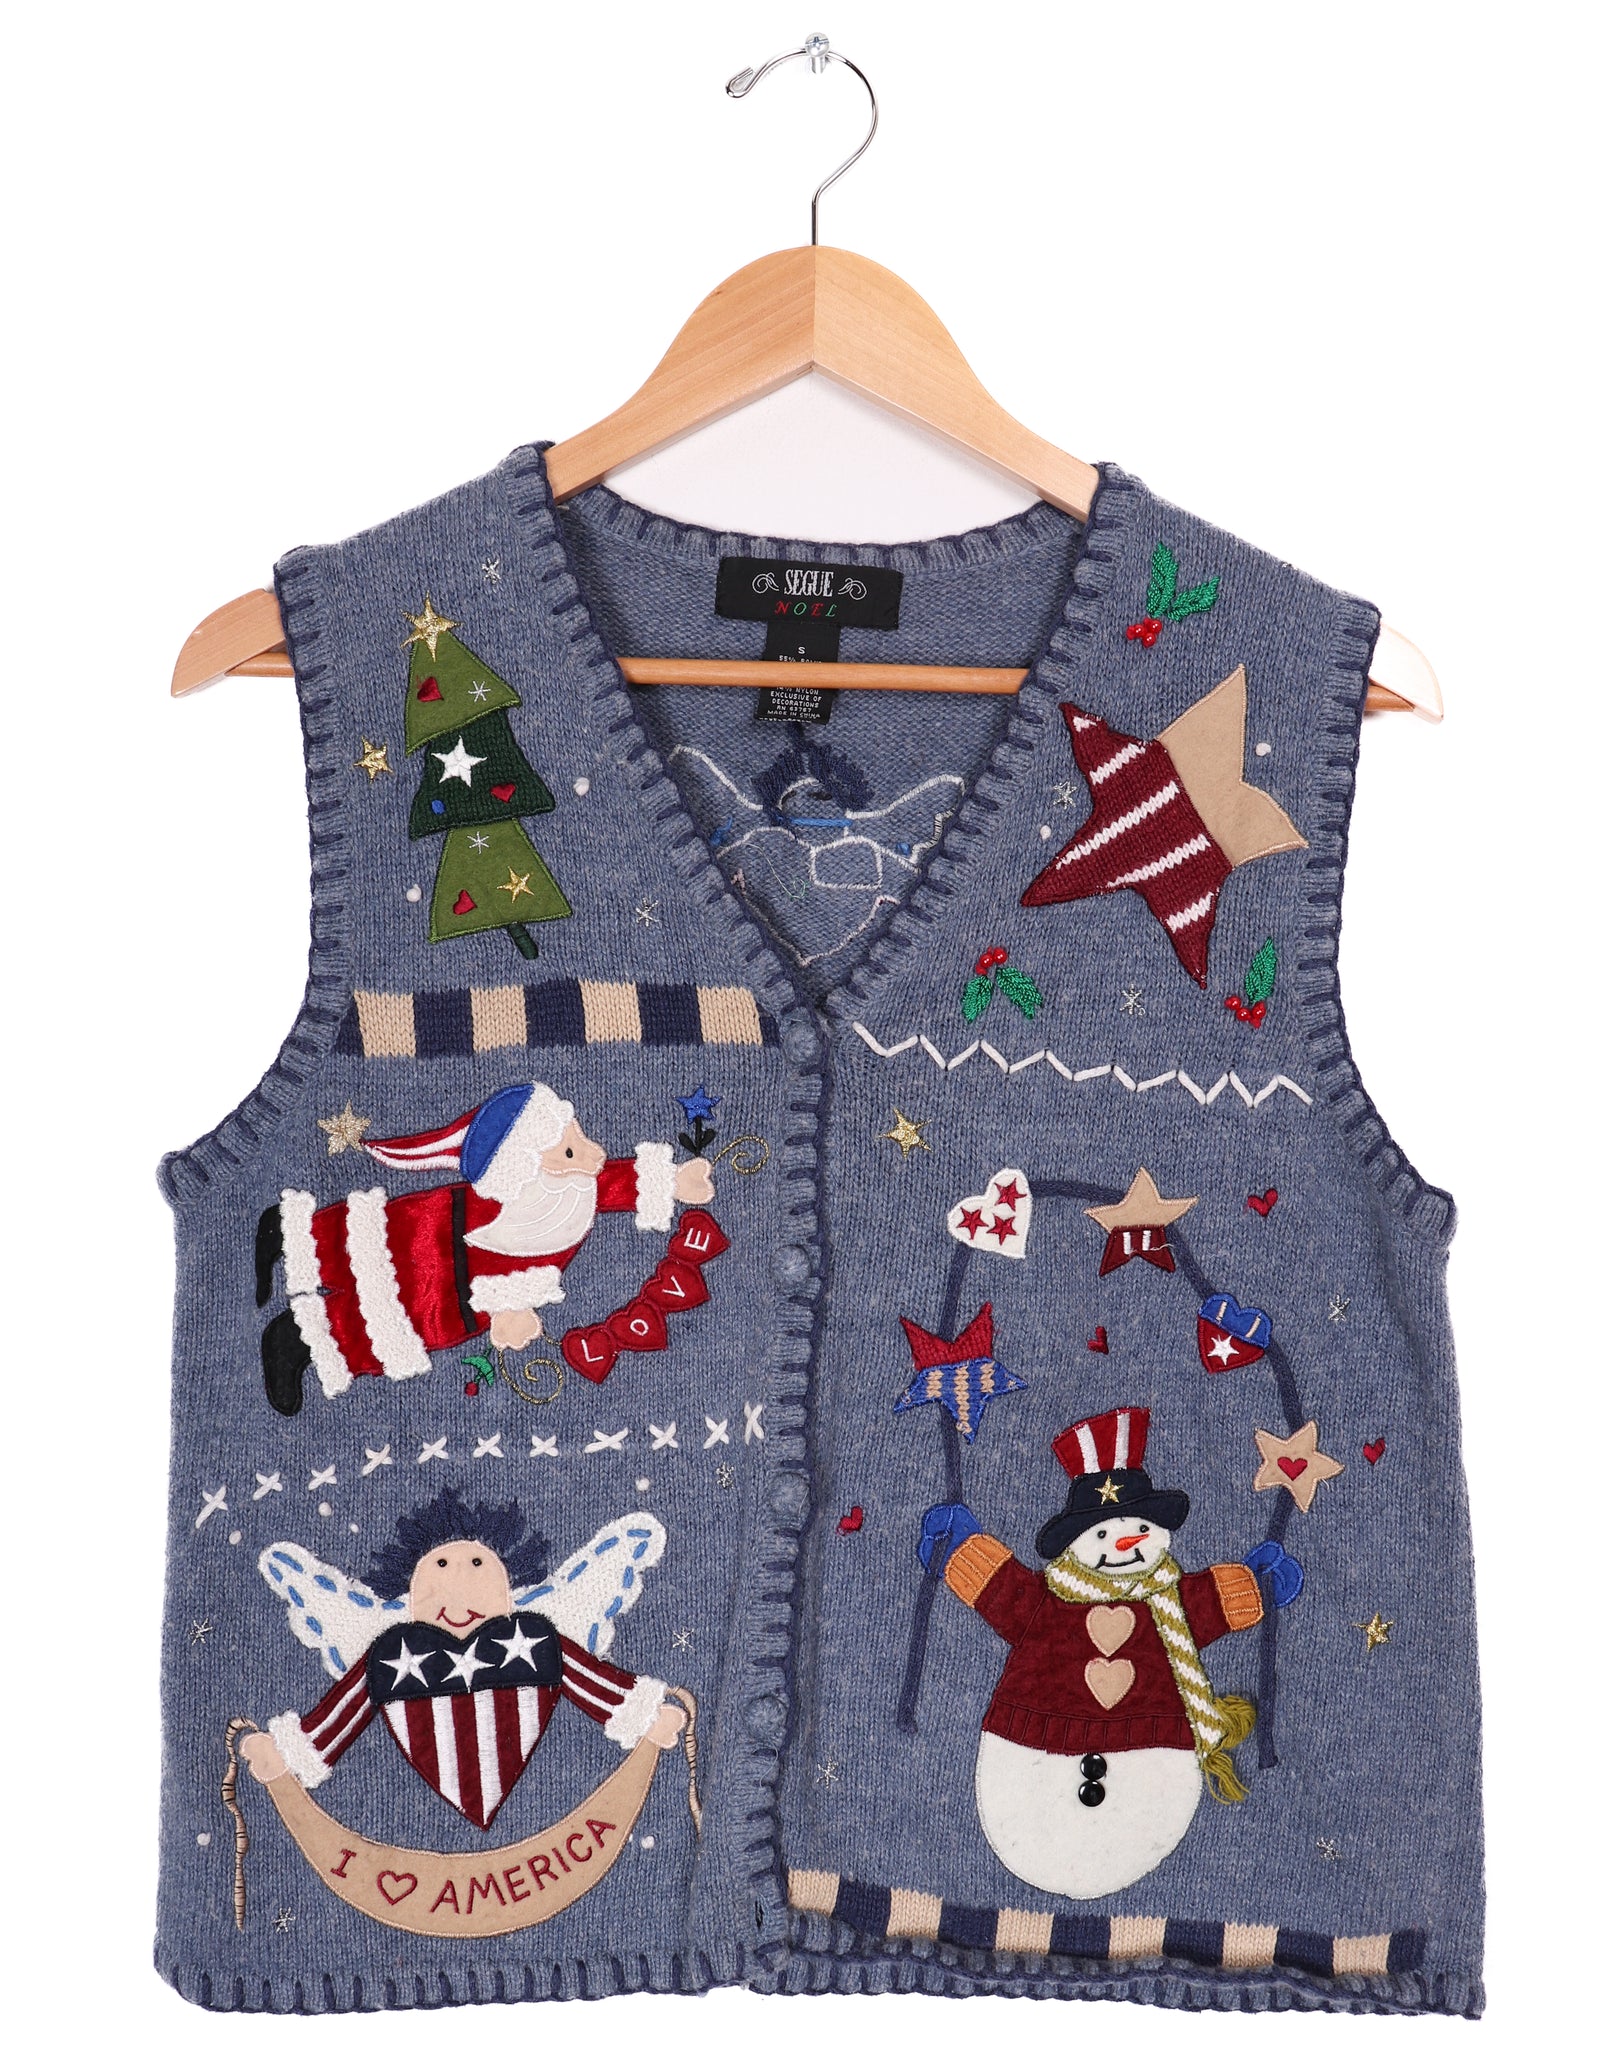 Segue Noel an American Christmas Sweater Vest